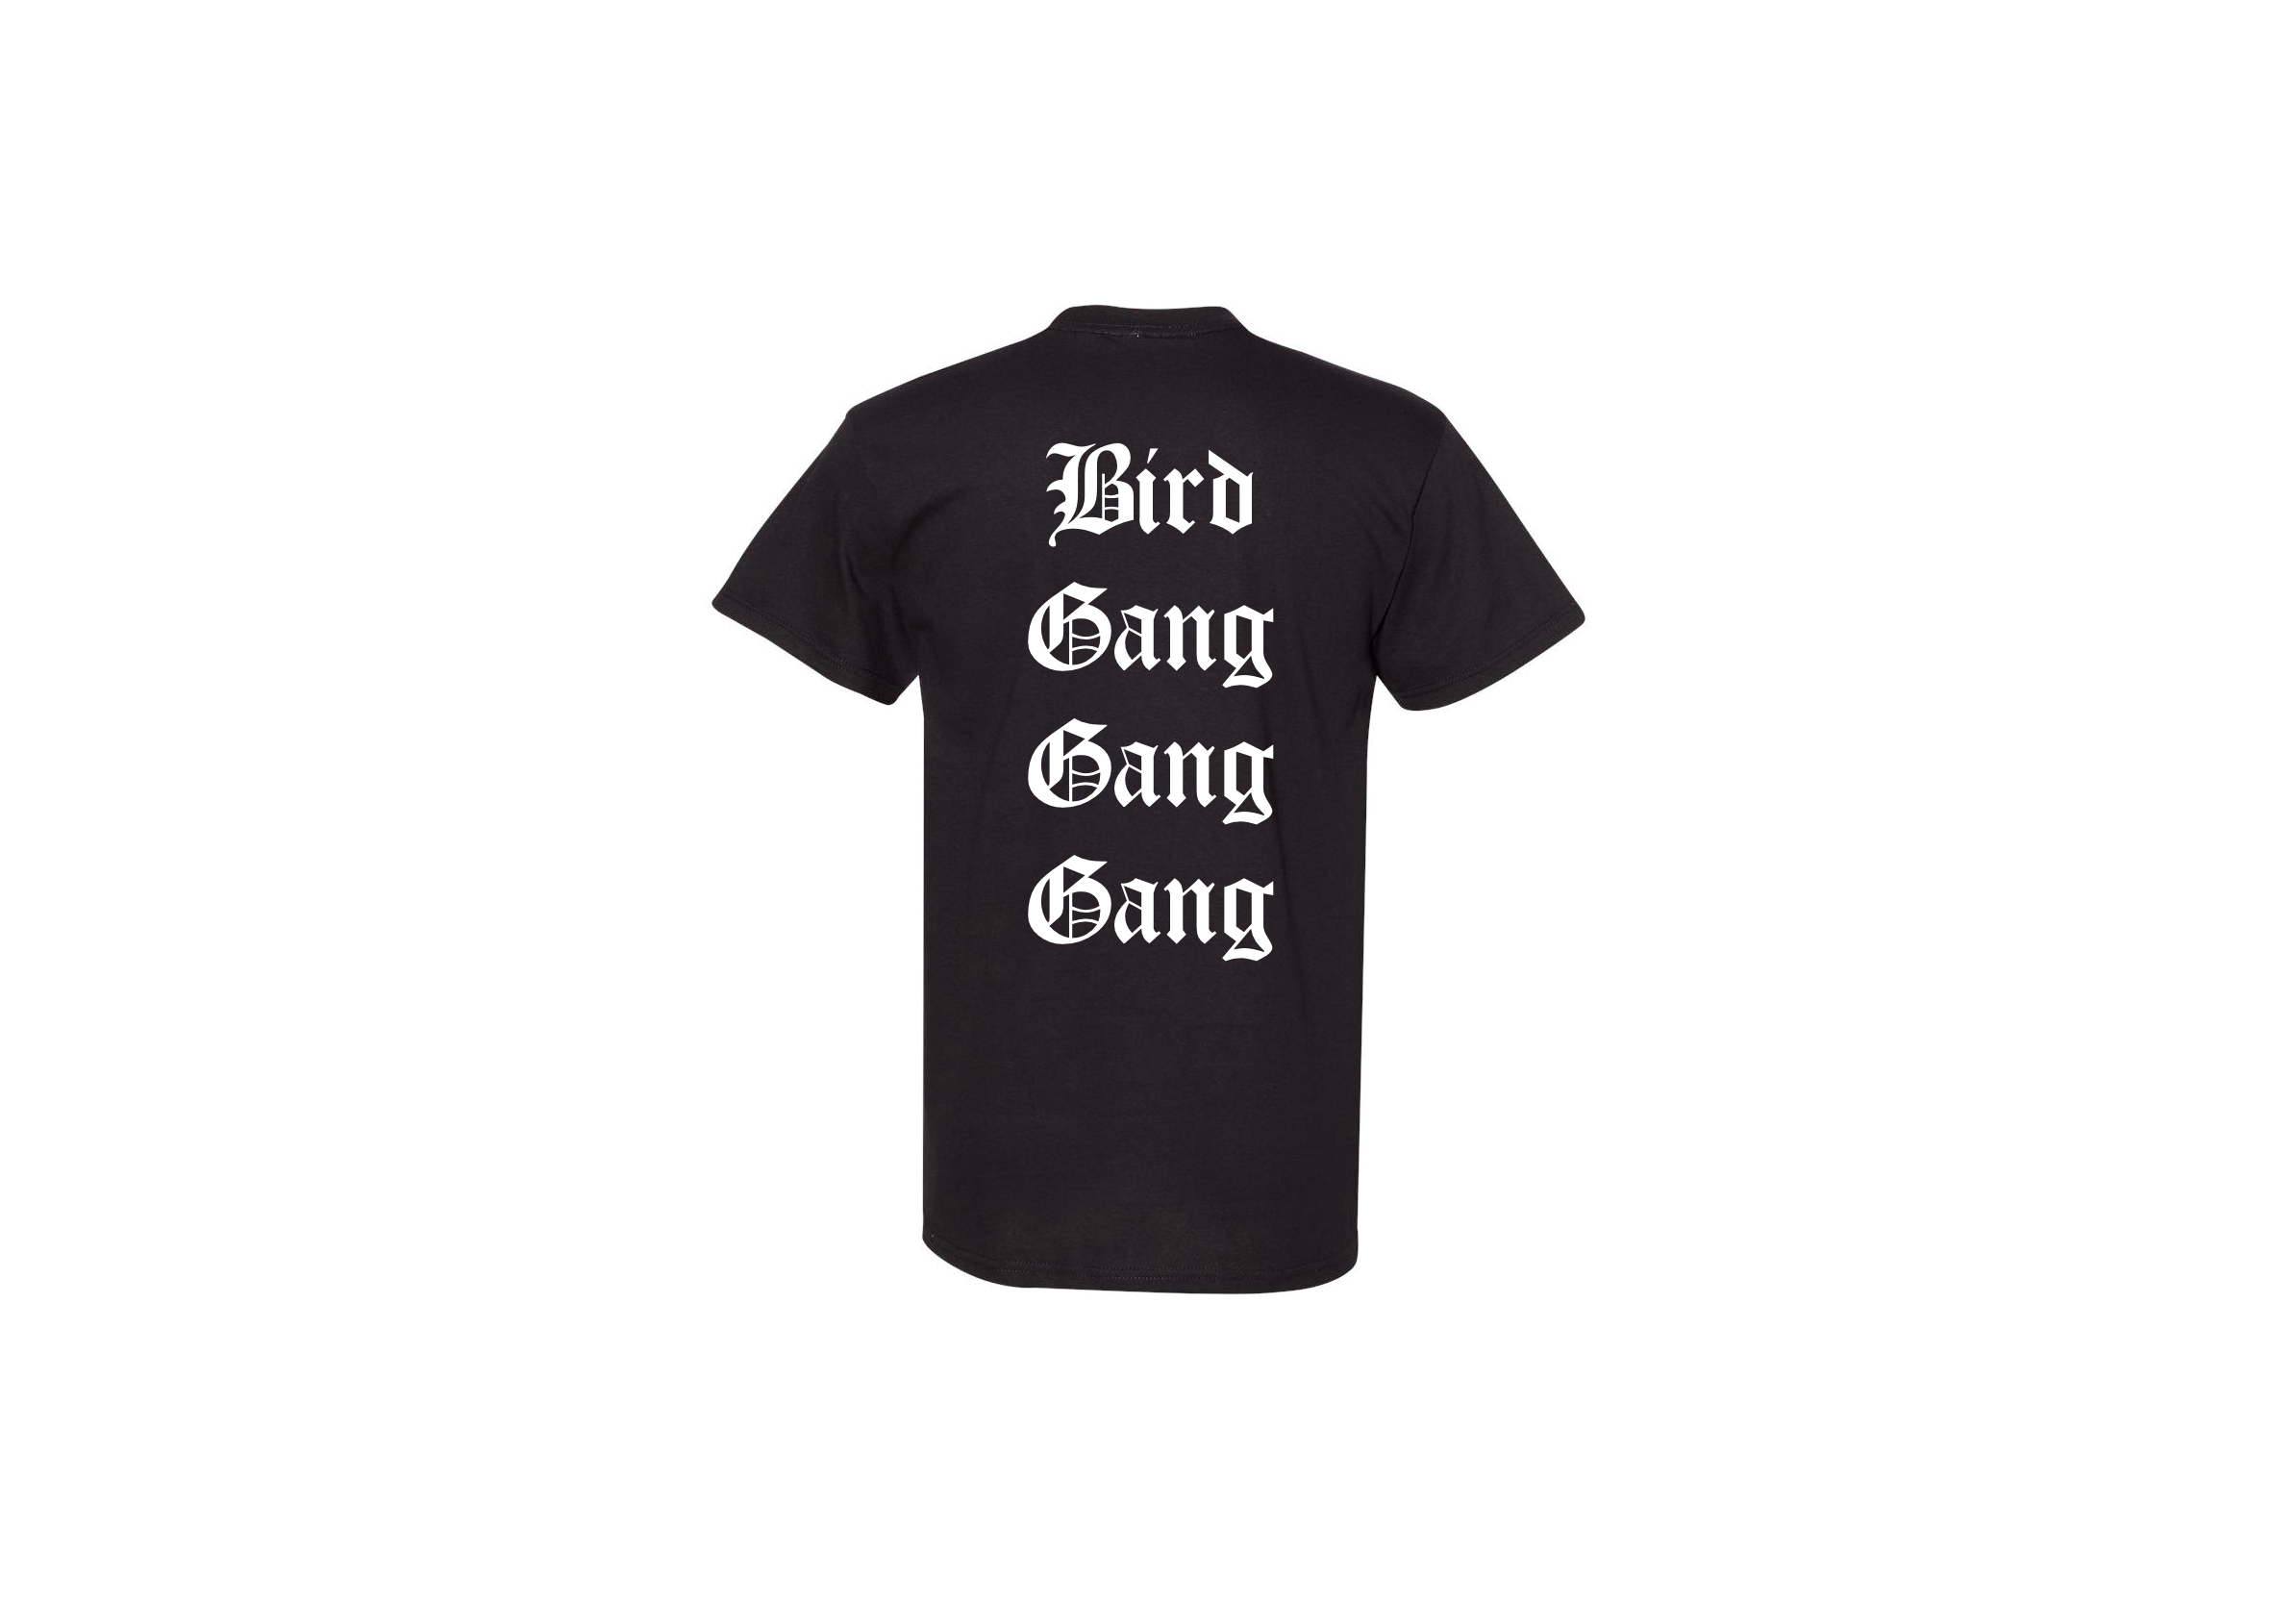 Bird Gang Gang Gang Black T-shirt